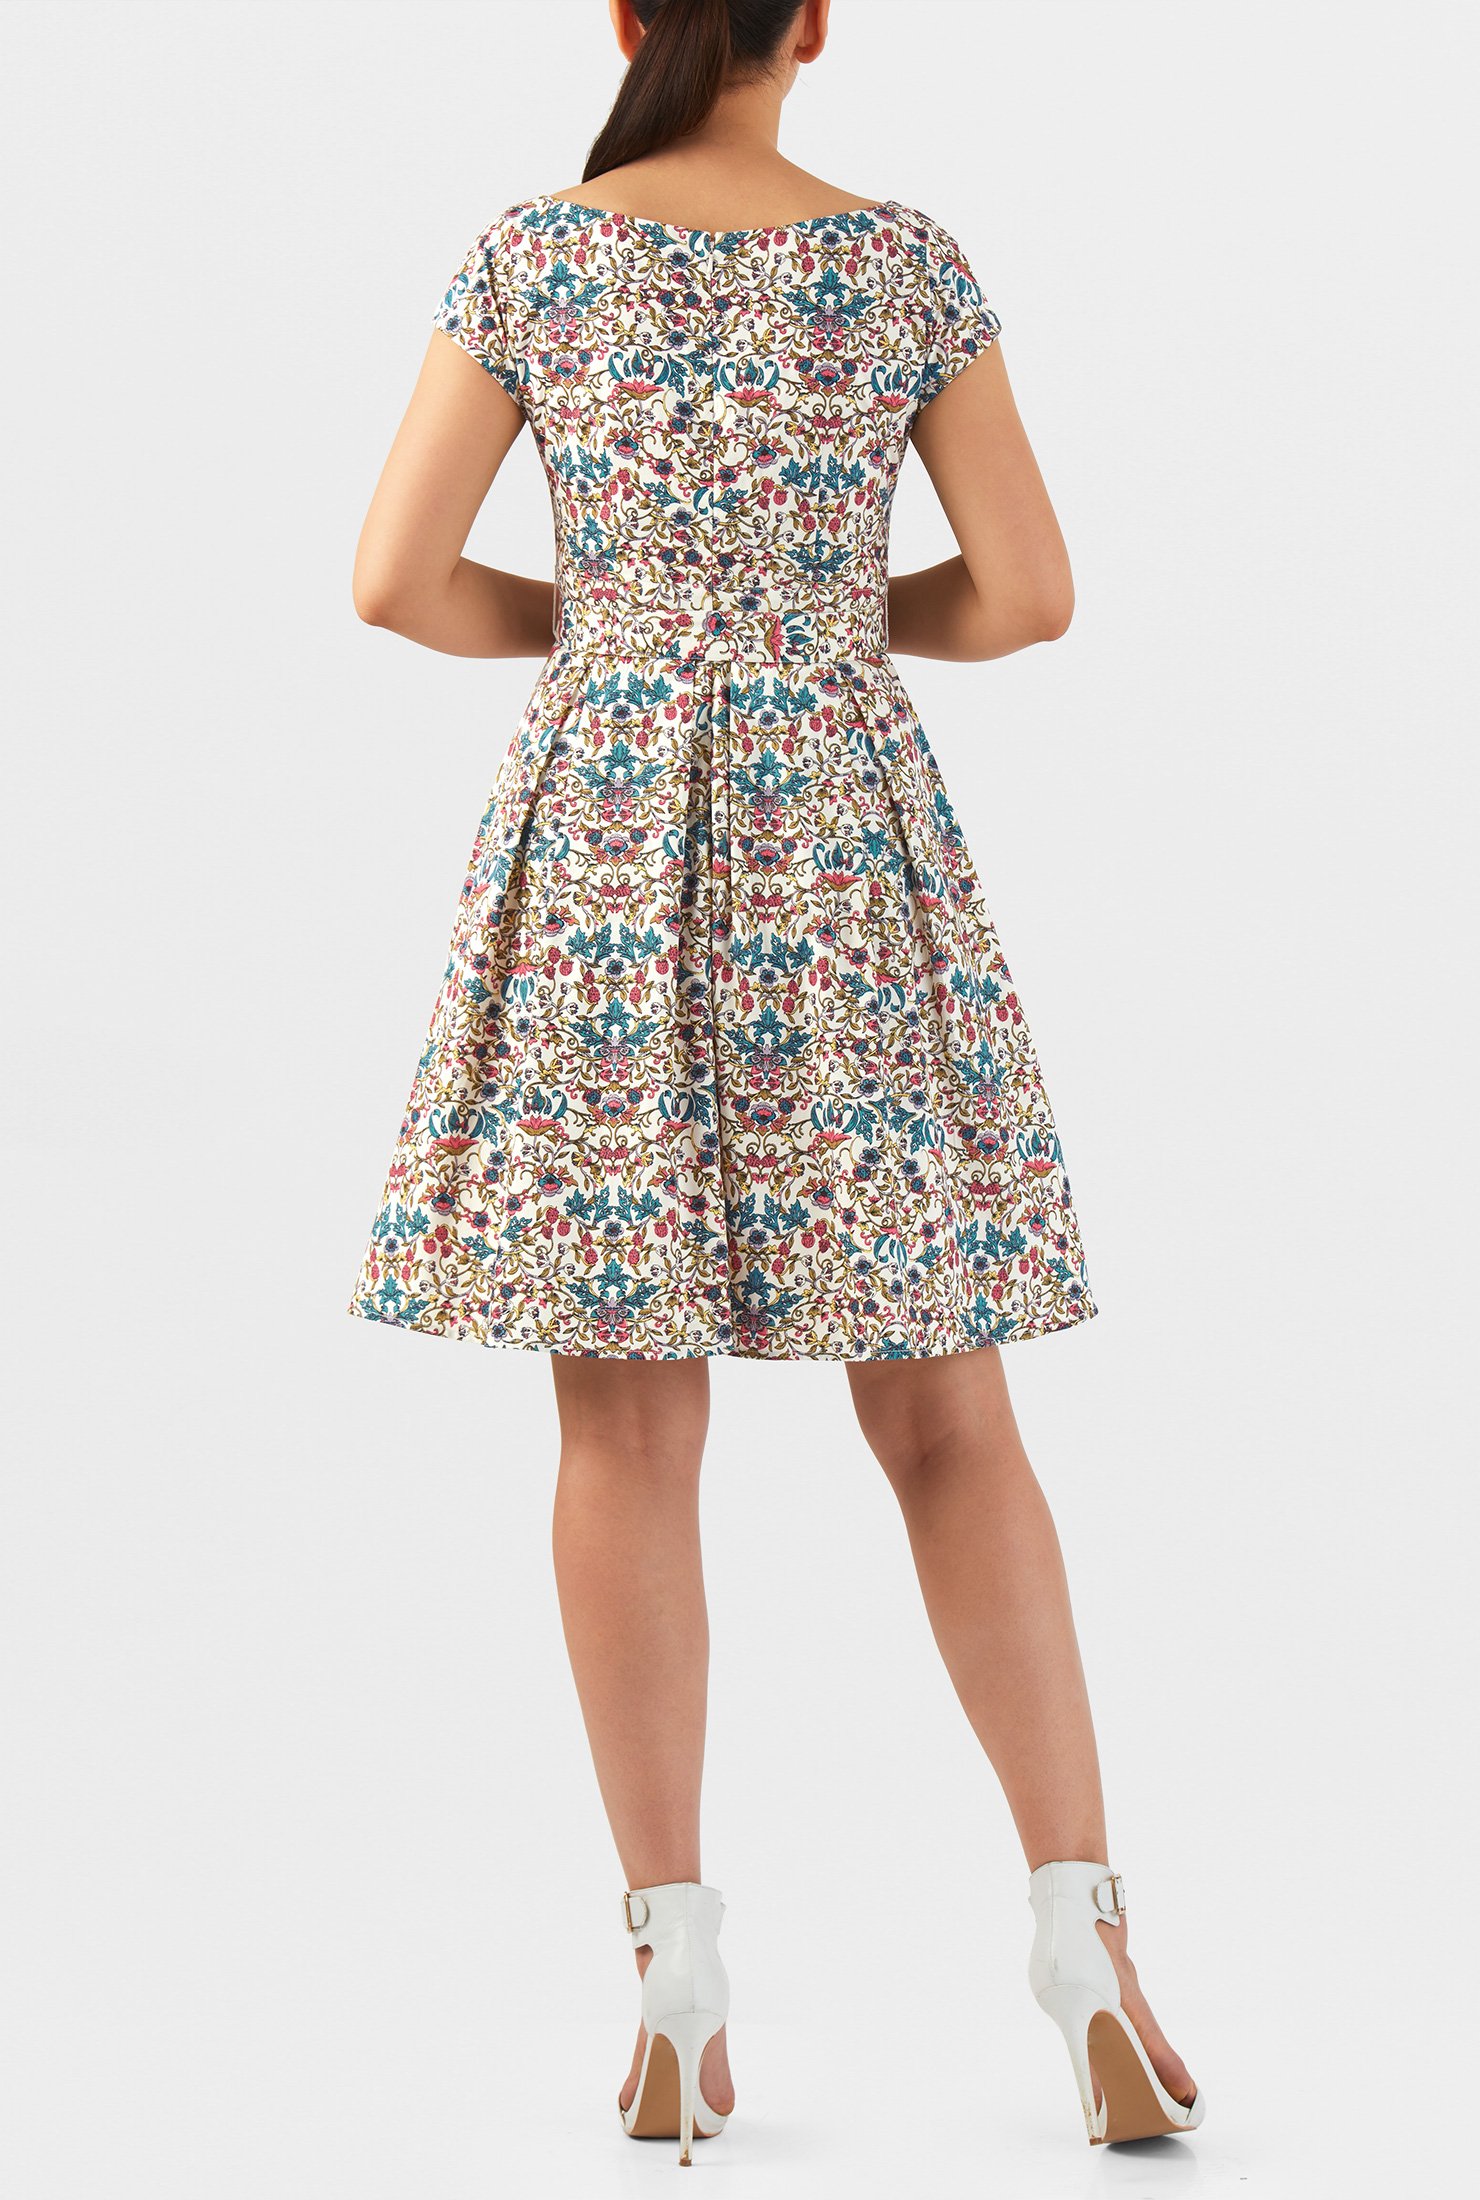 Shop Stylized floral print pleat bodice poplin dress | eShakti